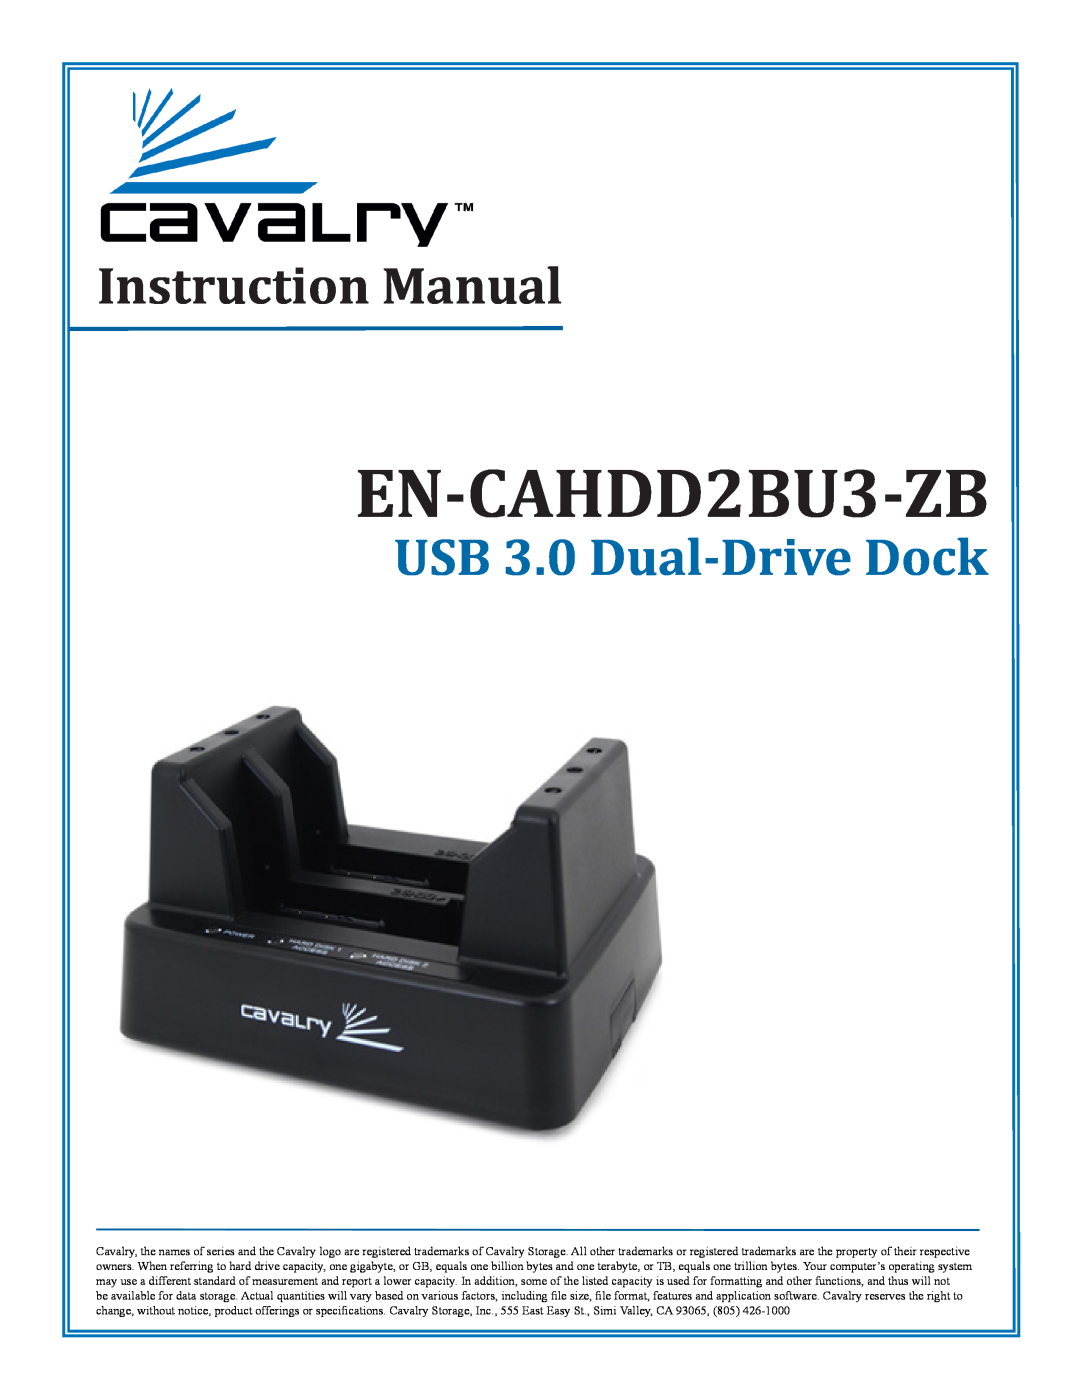 Cavalry Storage EN-CAHDD2BU3-ZB instruction manual Instruction Manual, USB 3.0 Dual-Drive Dock 